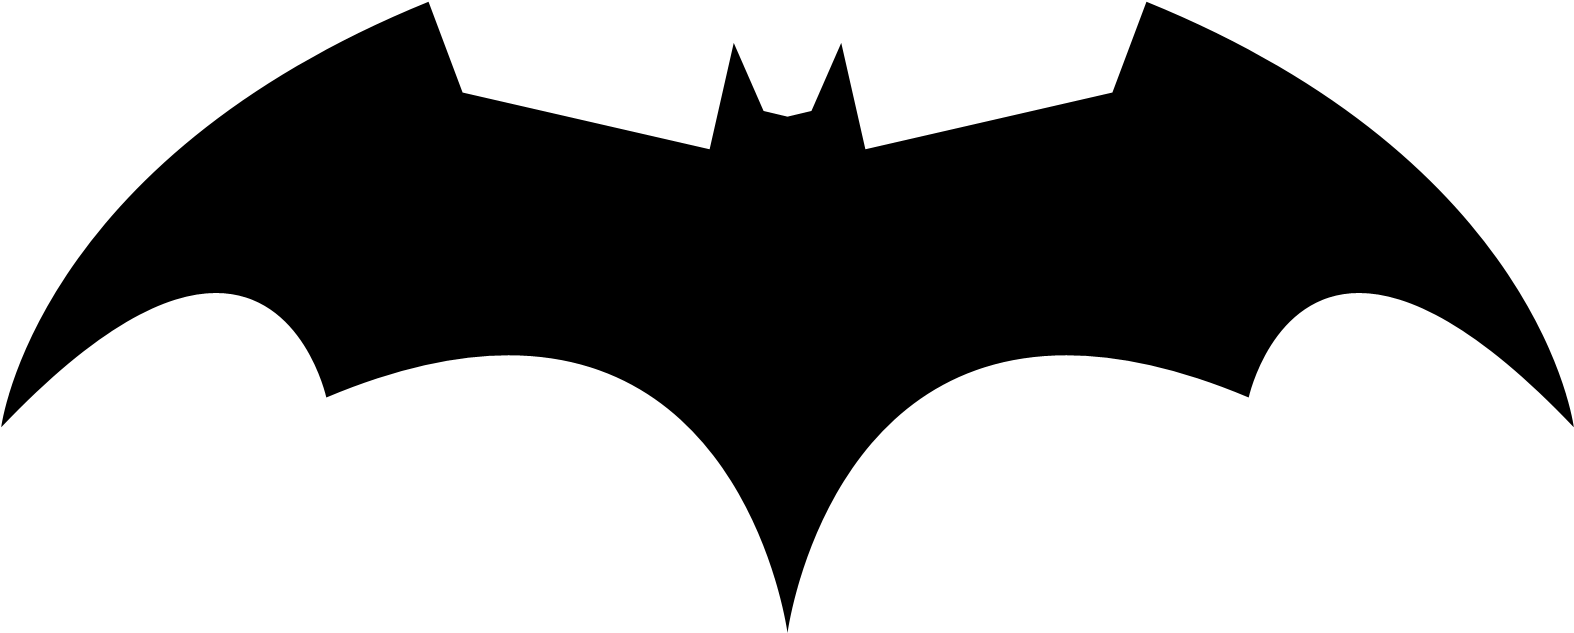 The Batman Logo Silhouette PNG